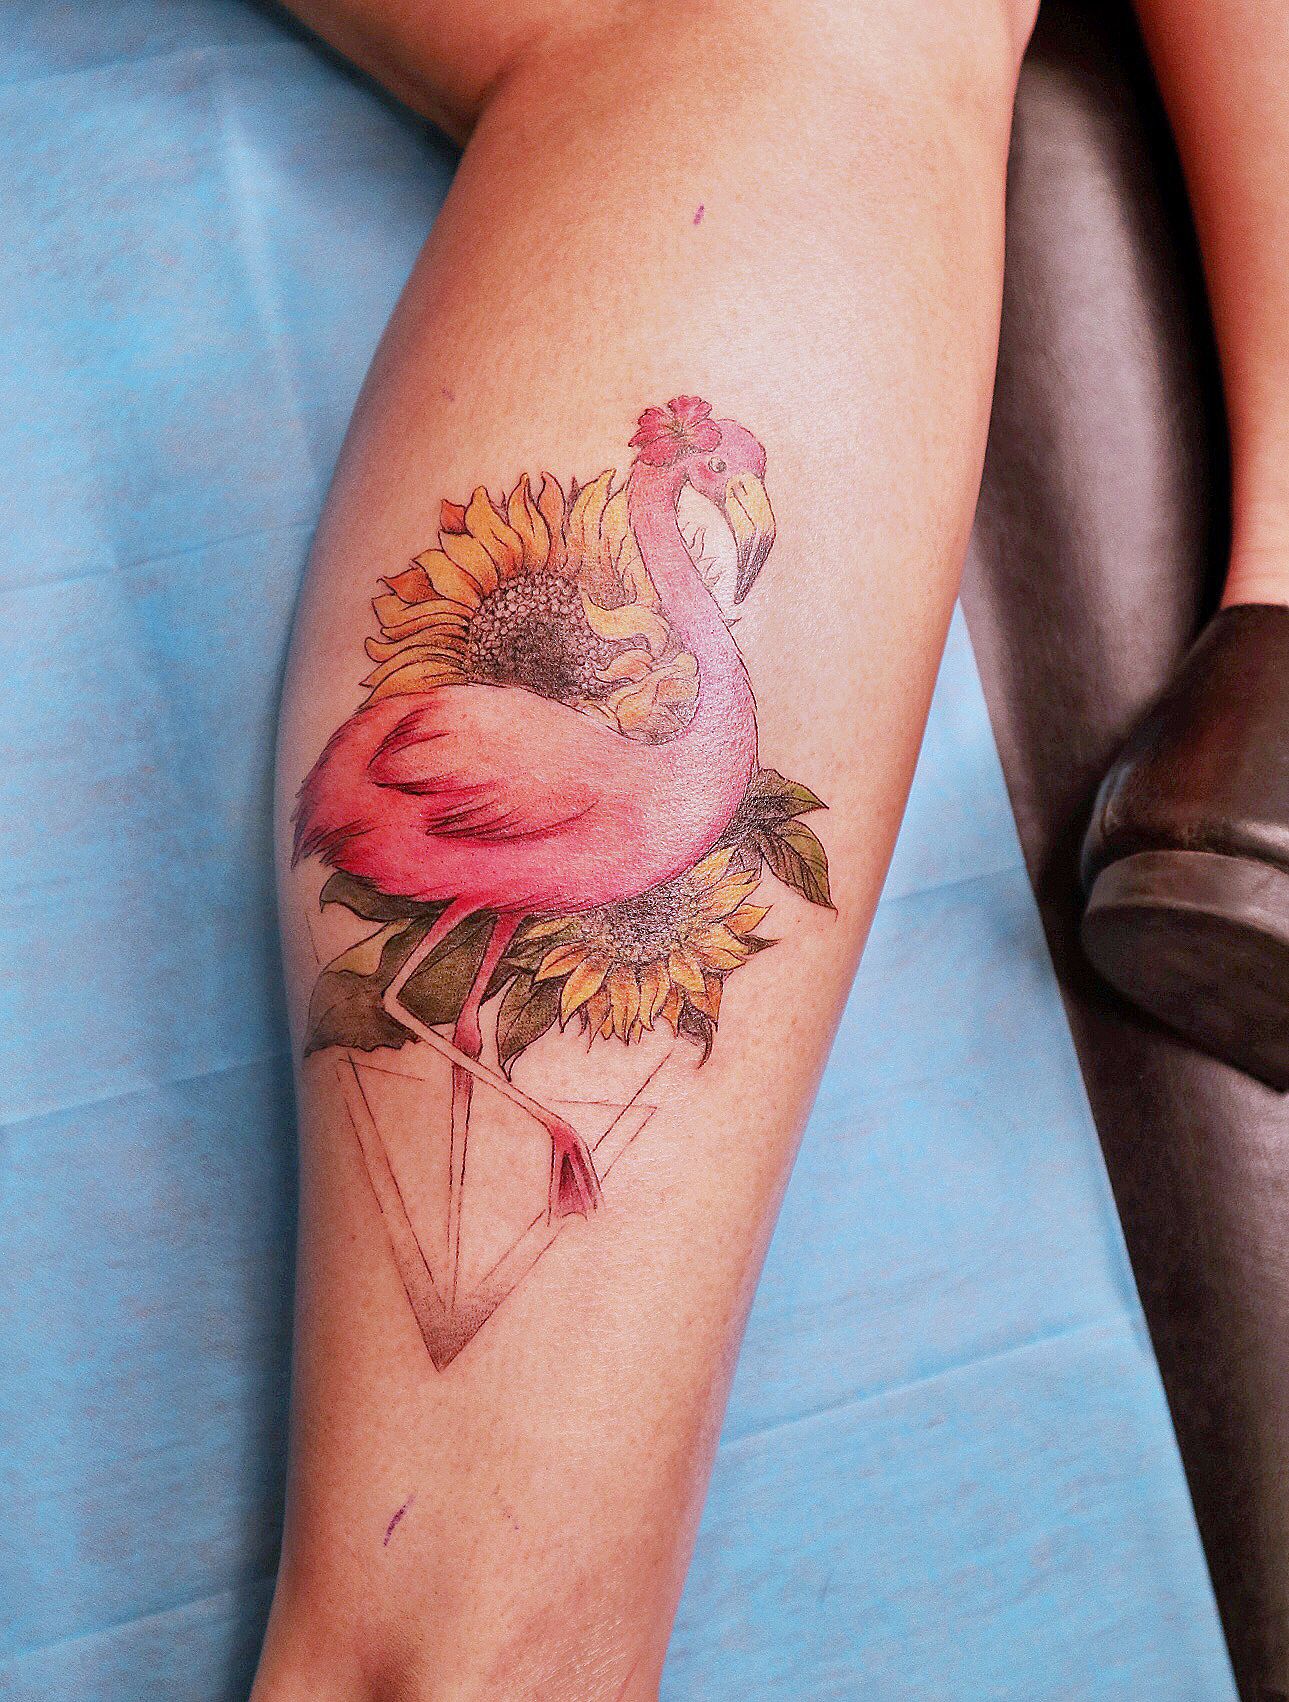 Flamingo Thank you Alex   Tattoos by Rachel Valentino  Facebook